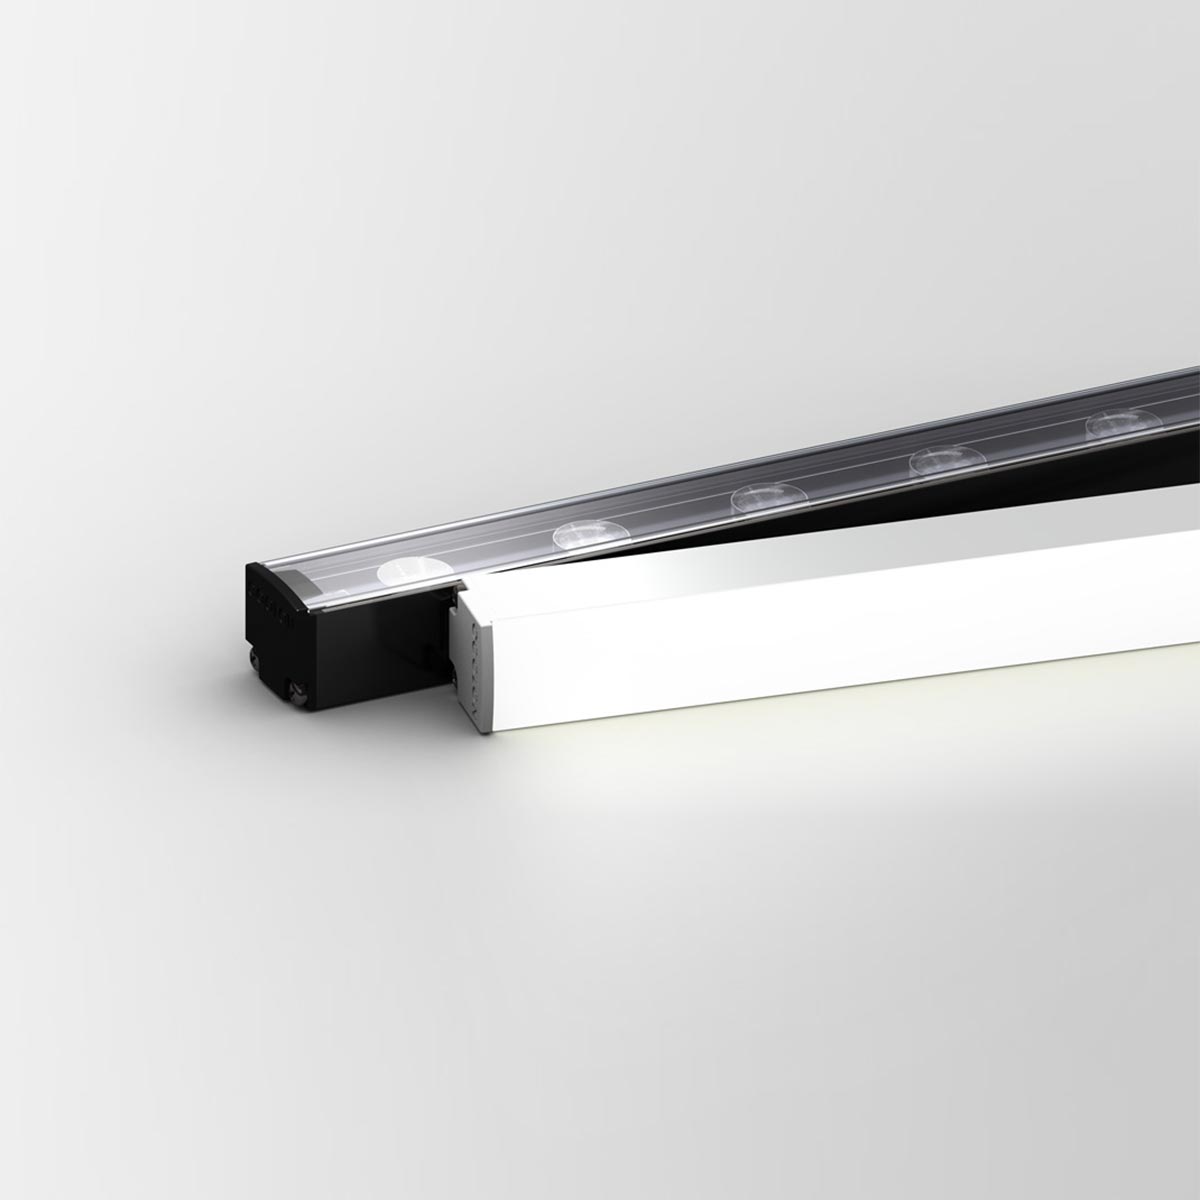 Aris – Compact Medium Power LED Linear Floodlight with Optical Control